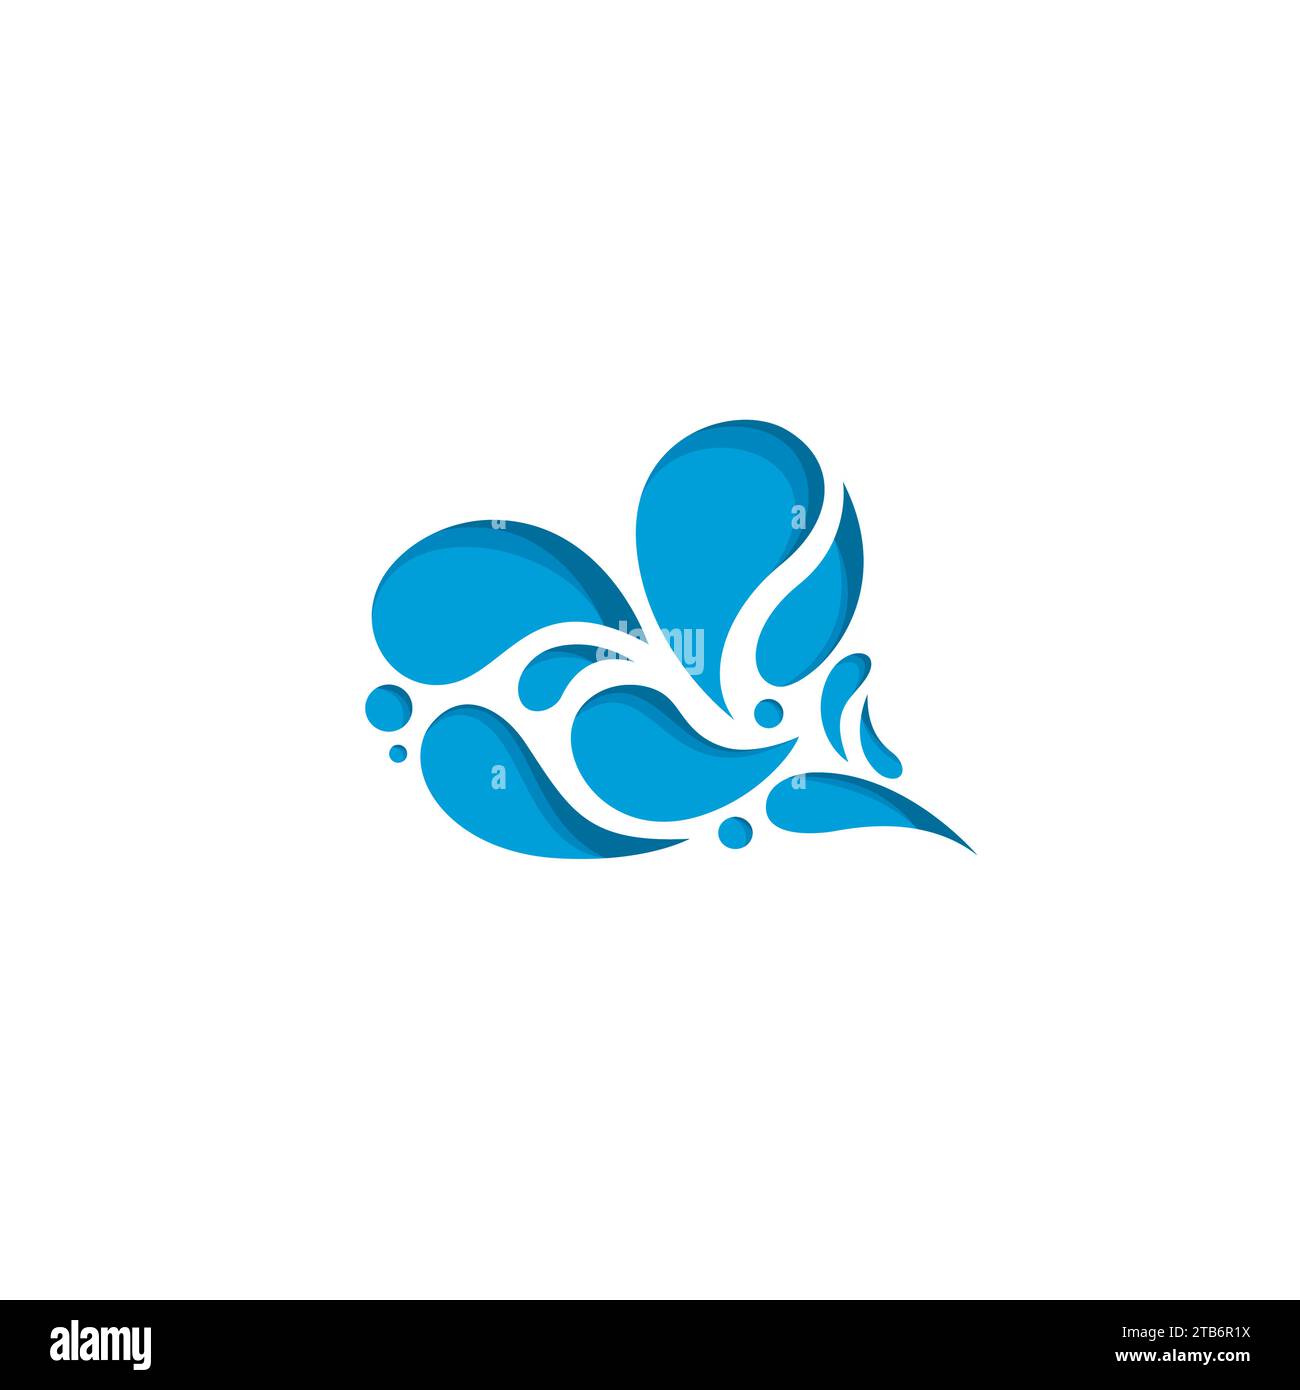 Love Water logo Simple. Water Vector Illustration Stock Vector